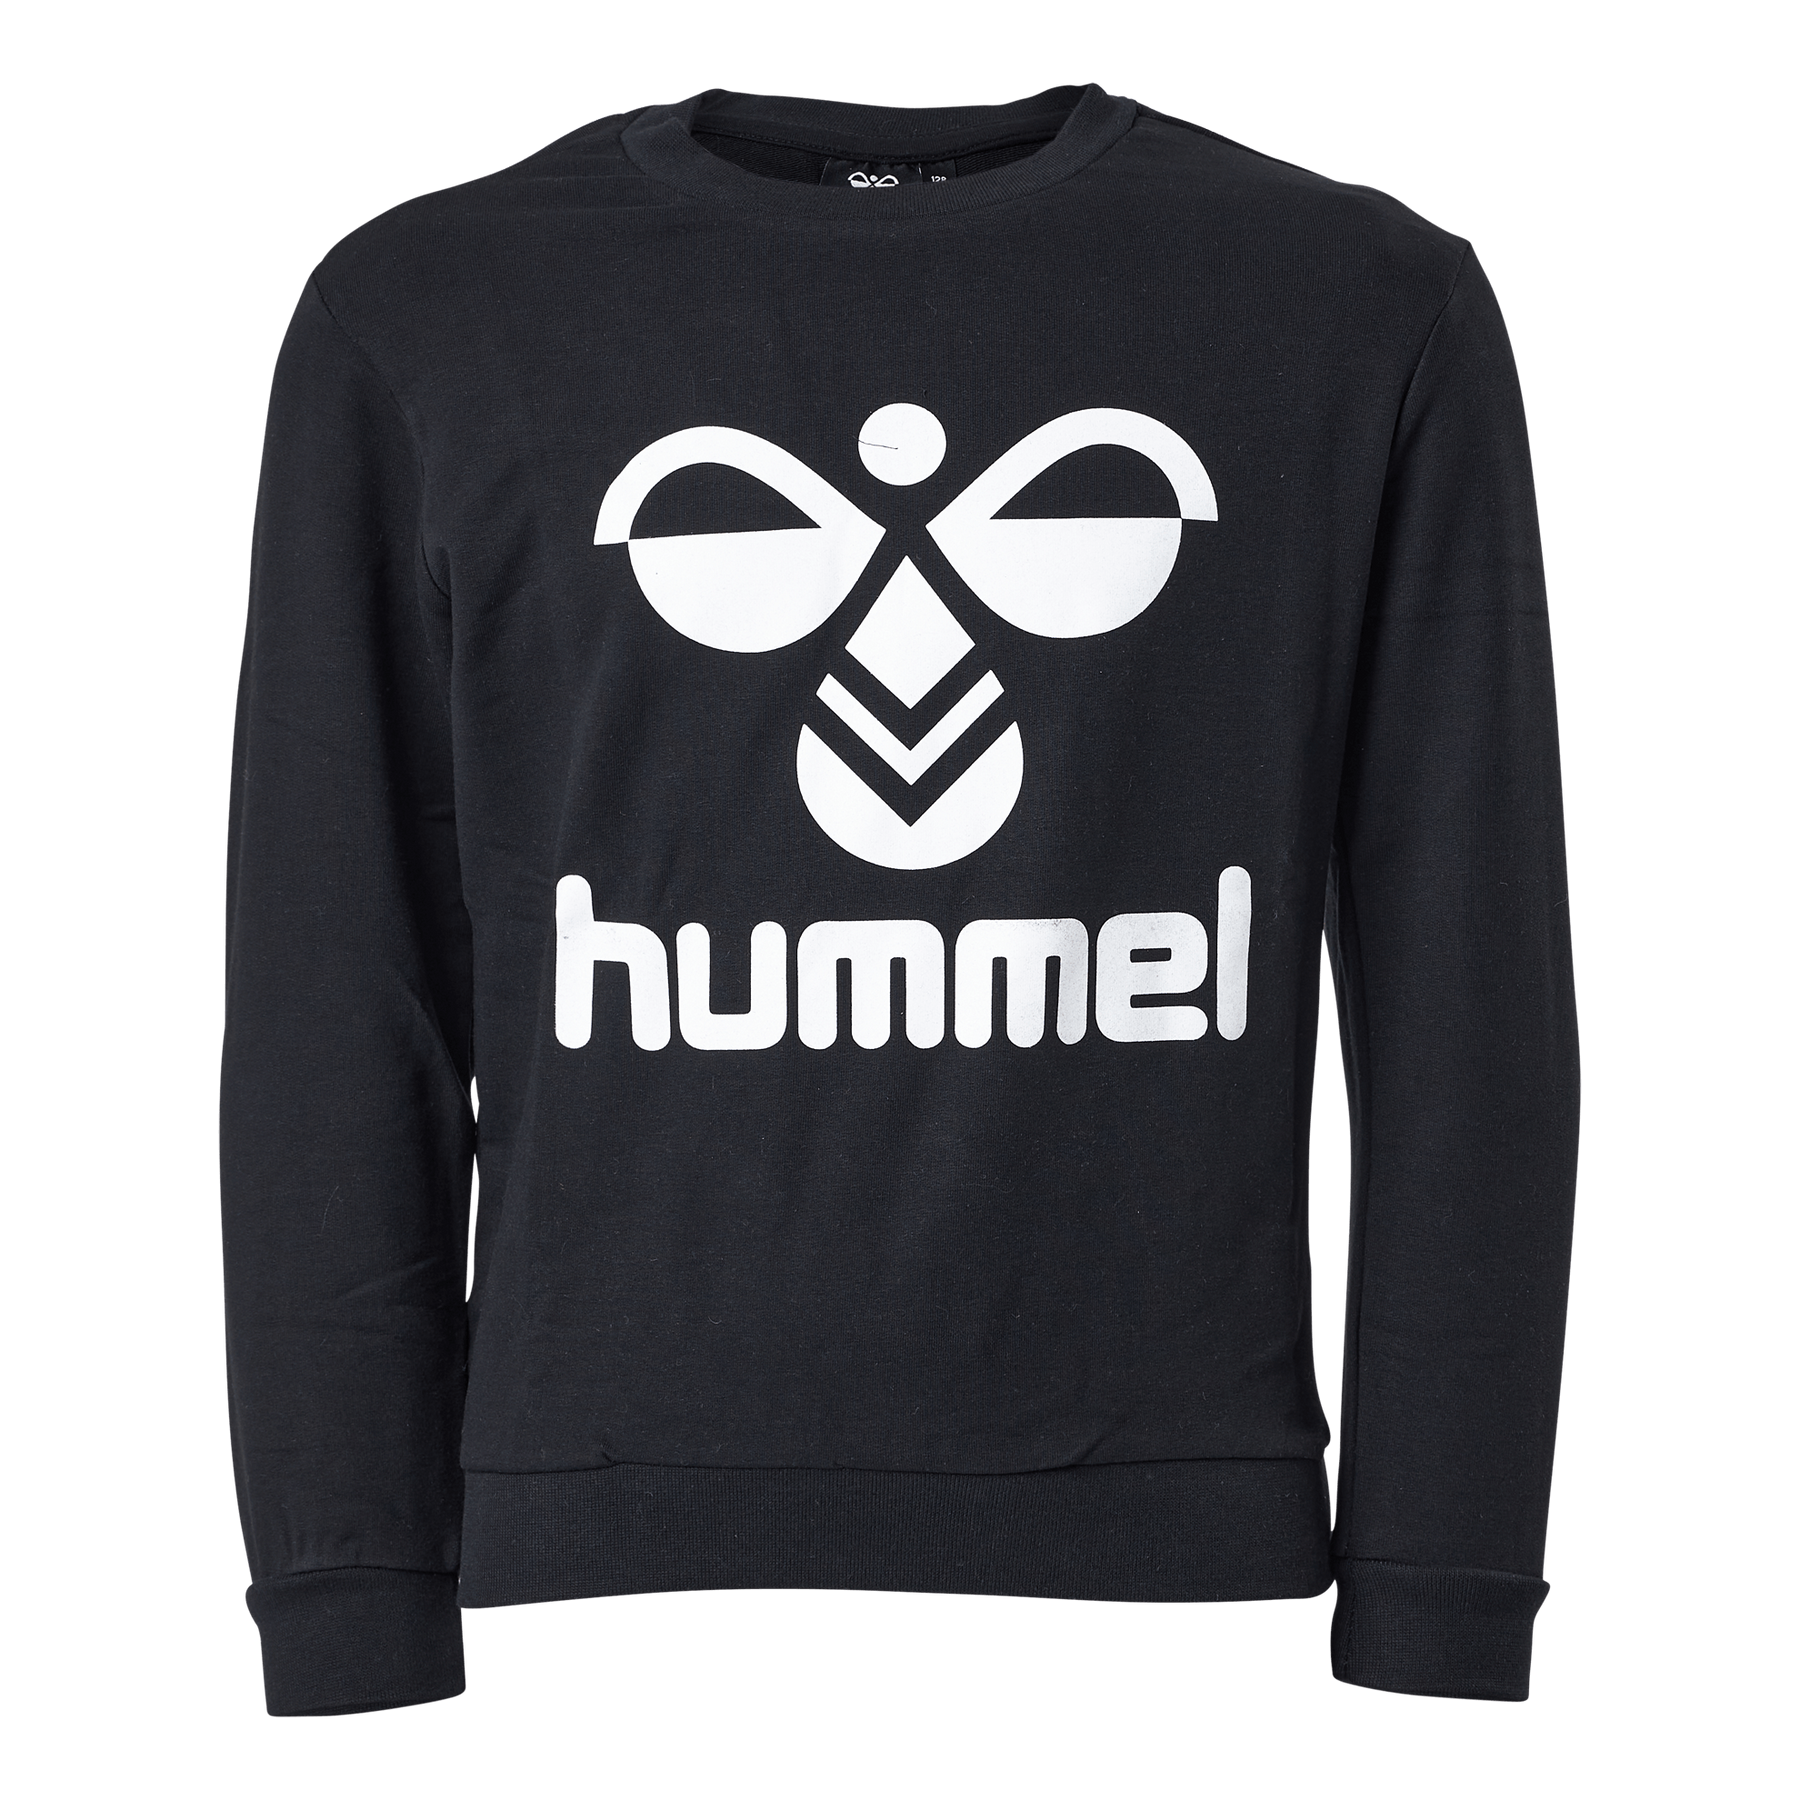 Hmldos Sweatshirt Black | Runforest.com